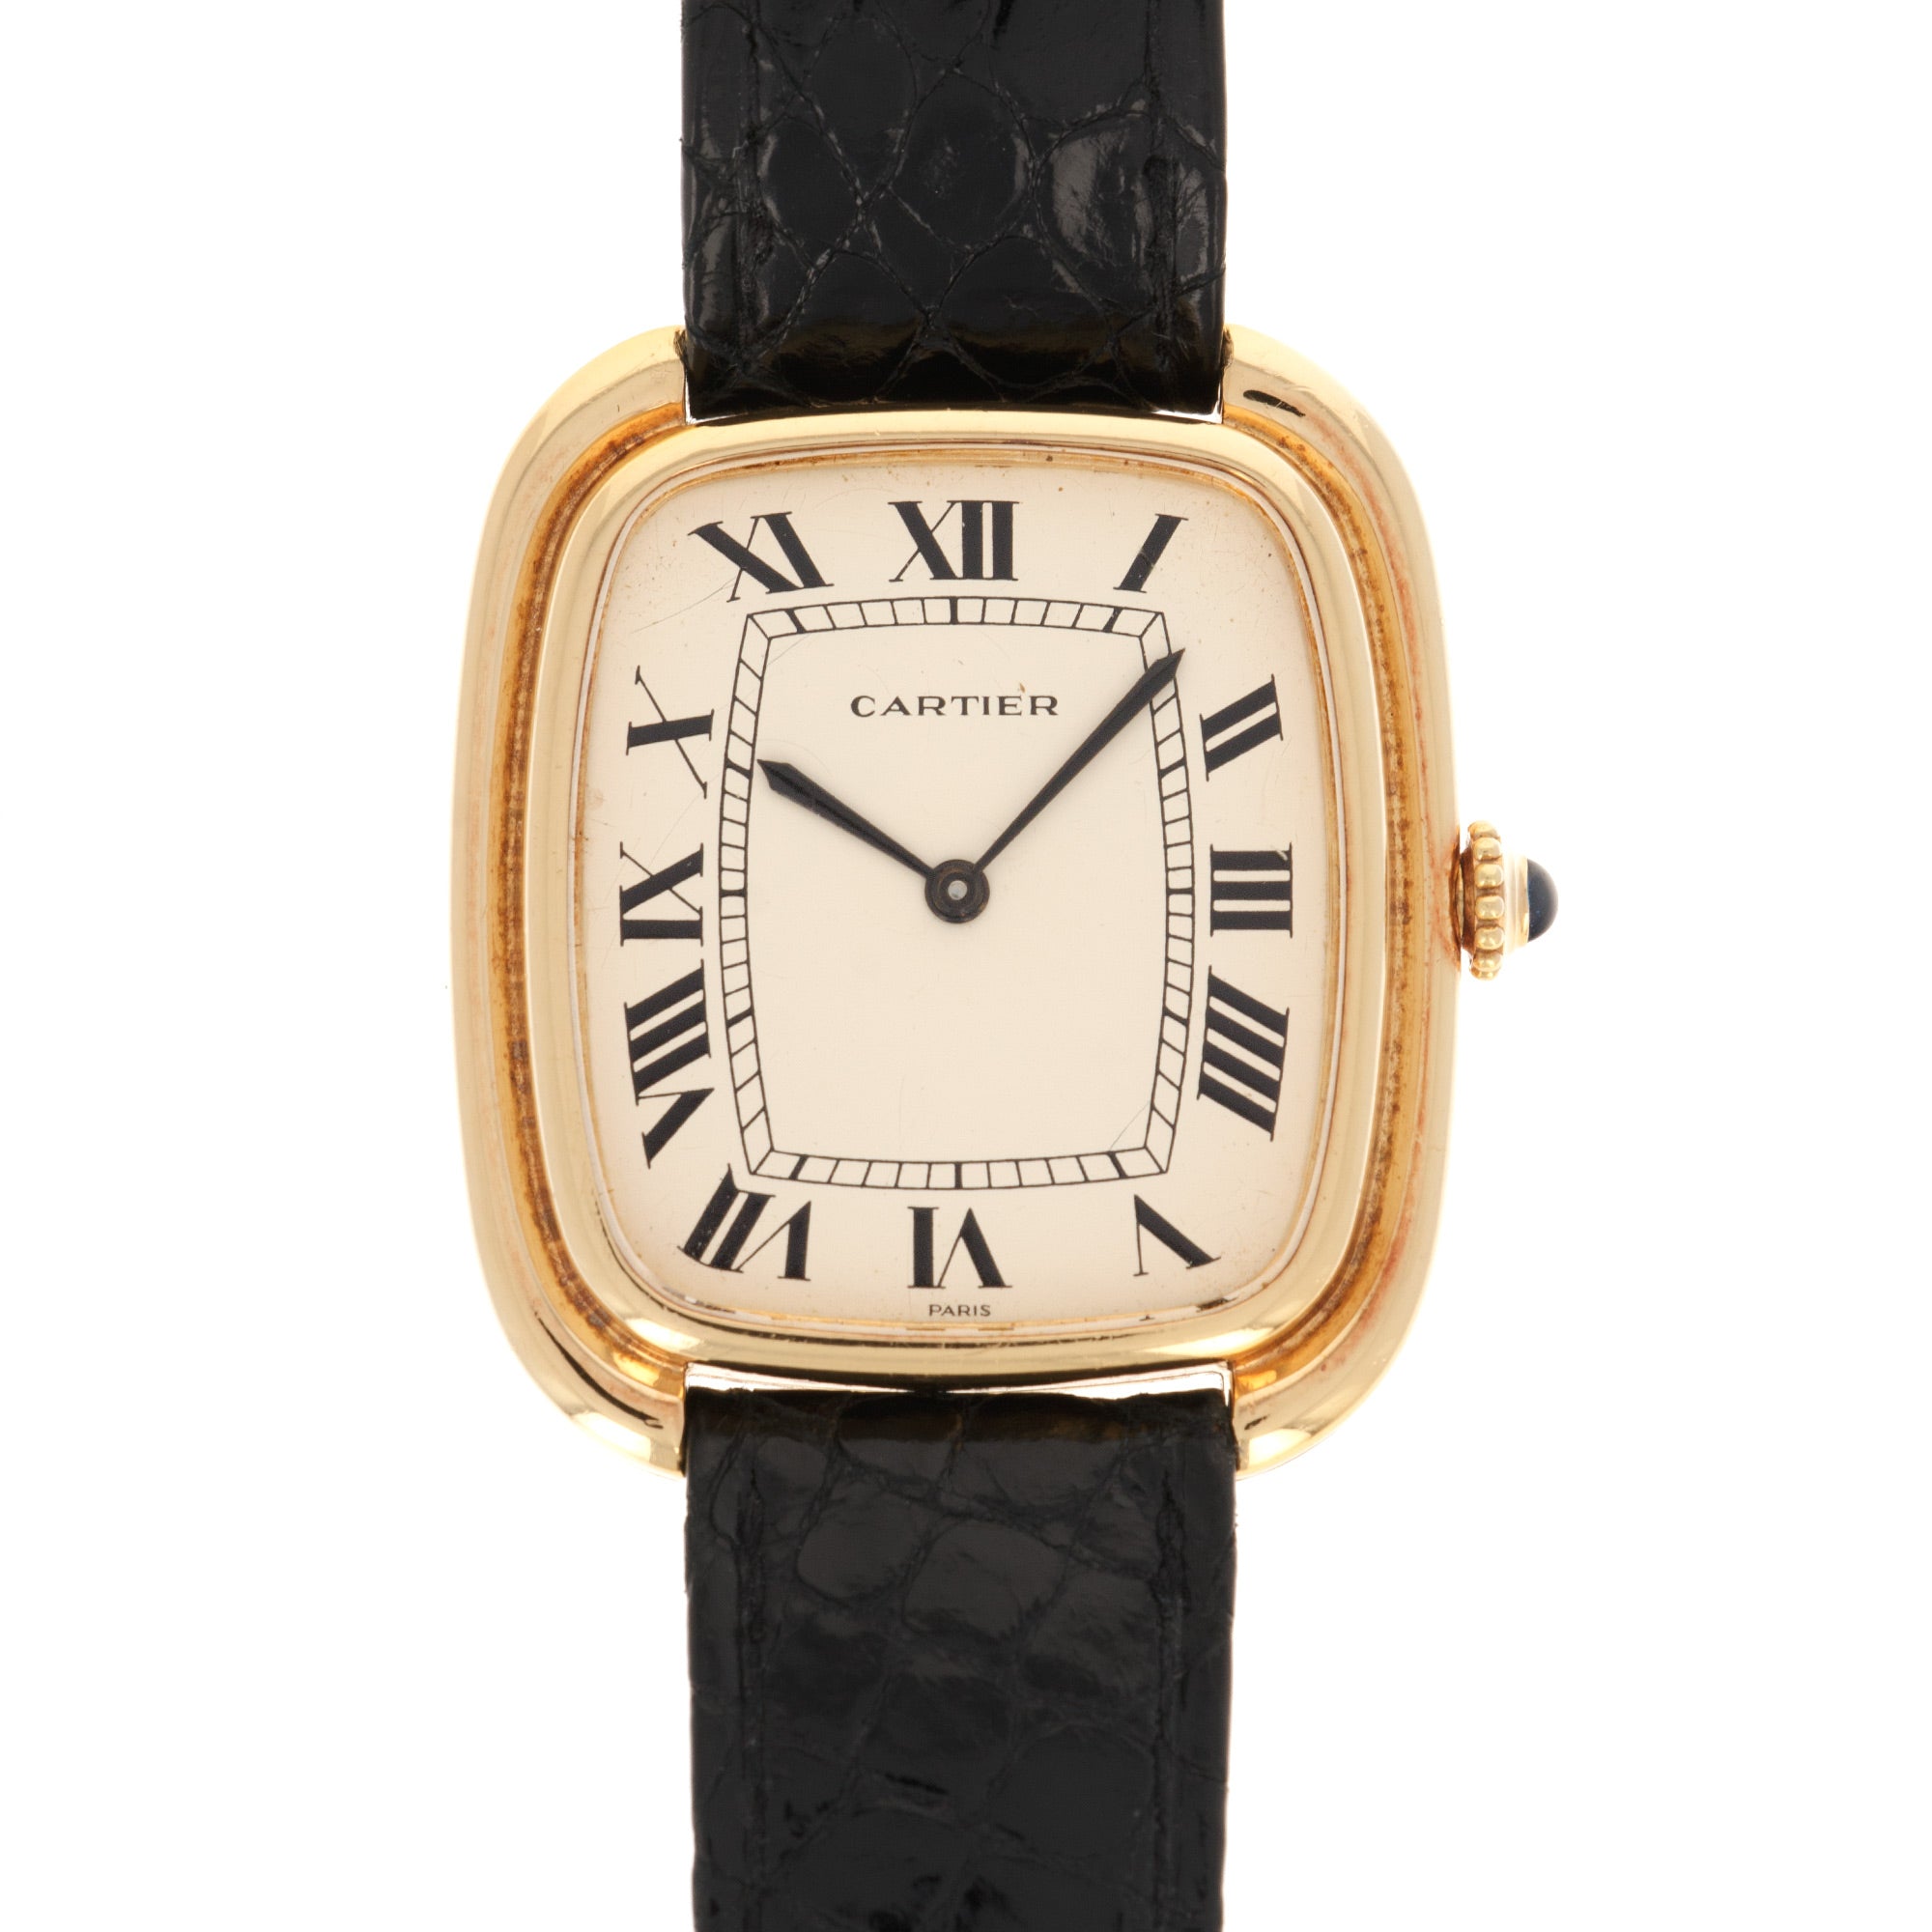 Cartier - Cartier Yellow Gold Jumbo TV Shaped Watch - The Keystone Watches